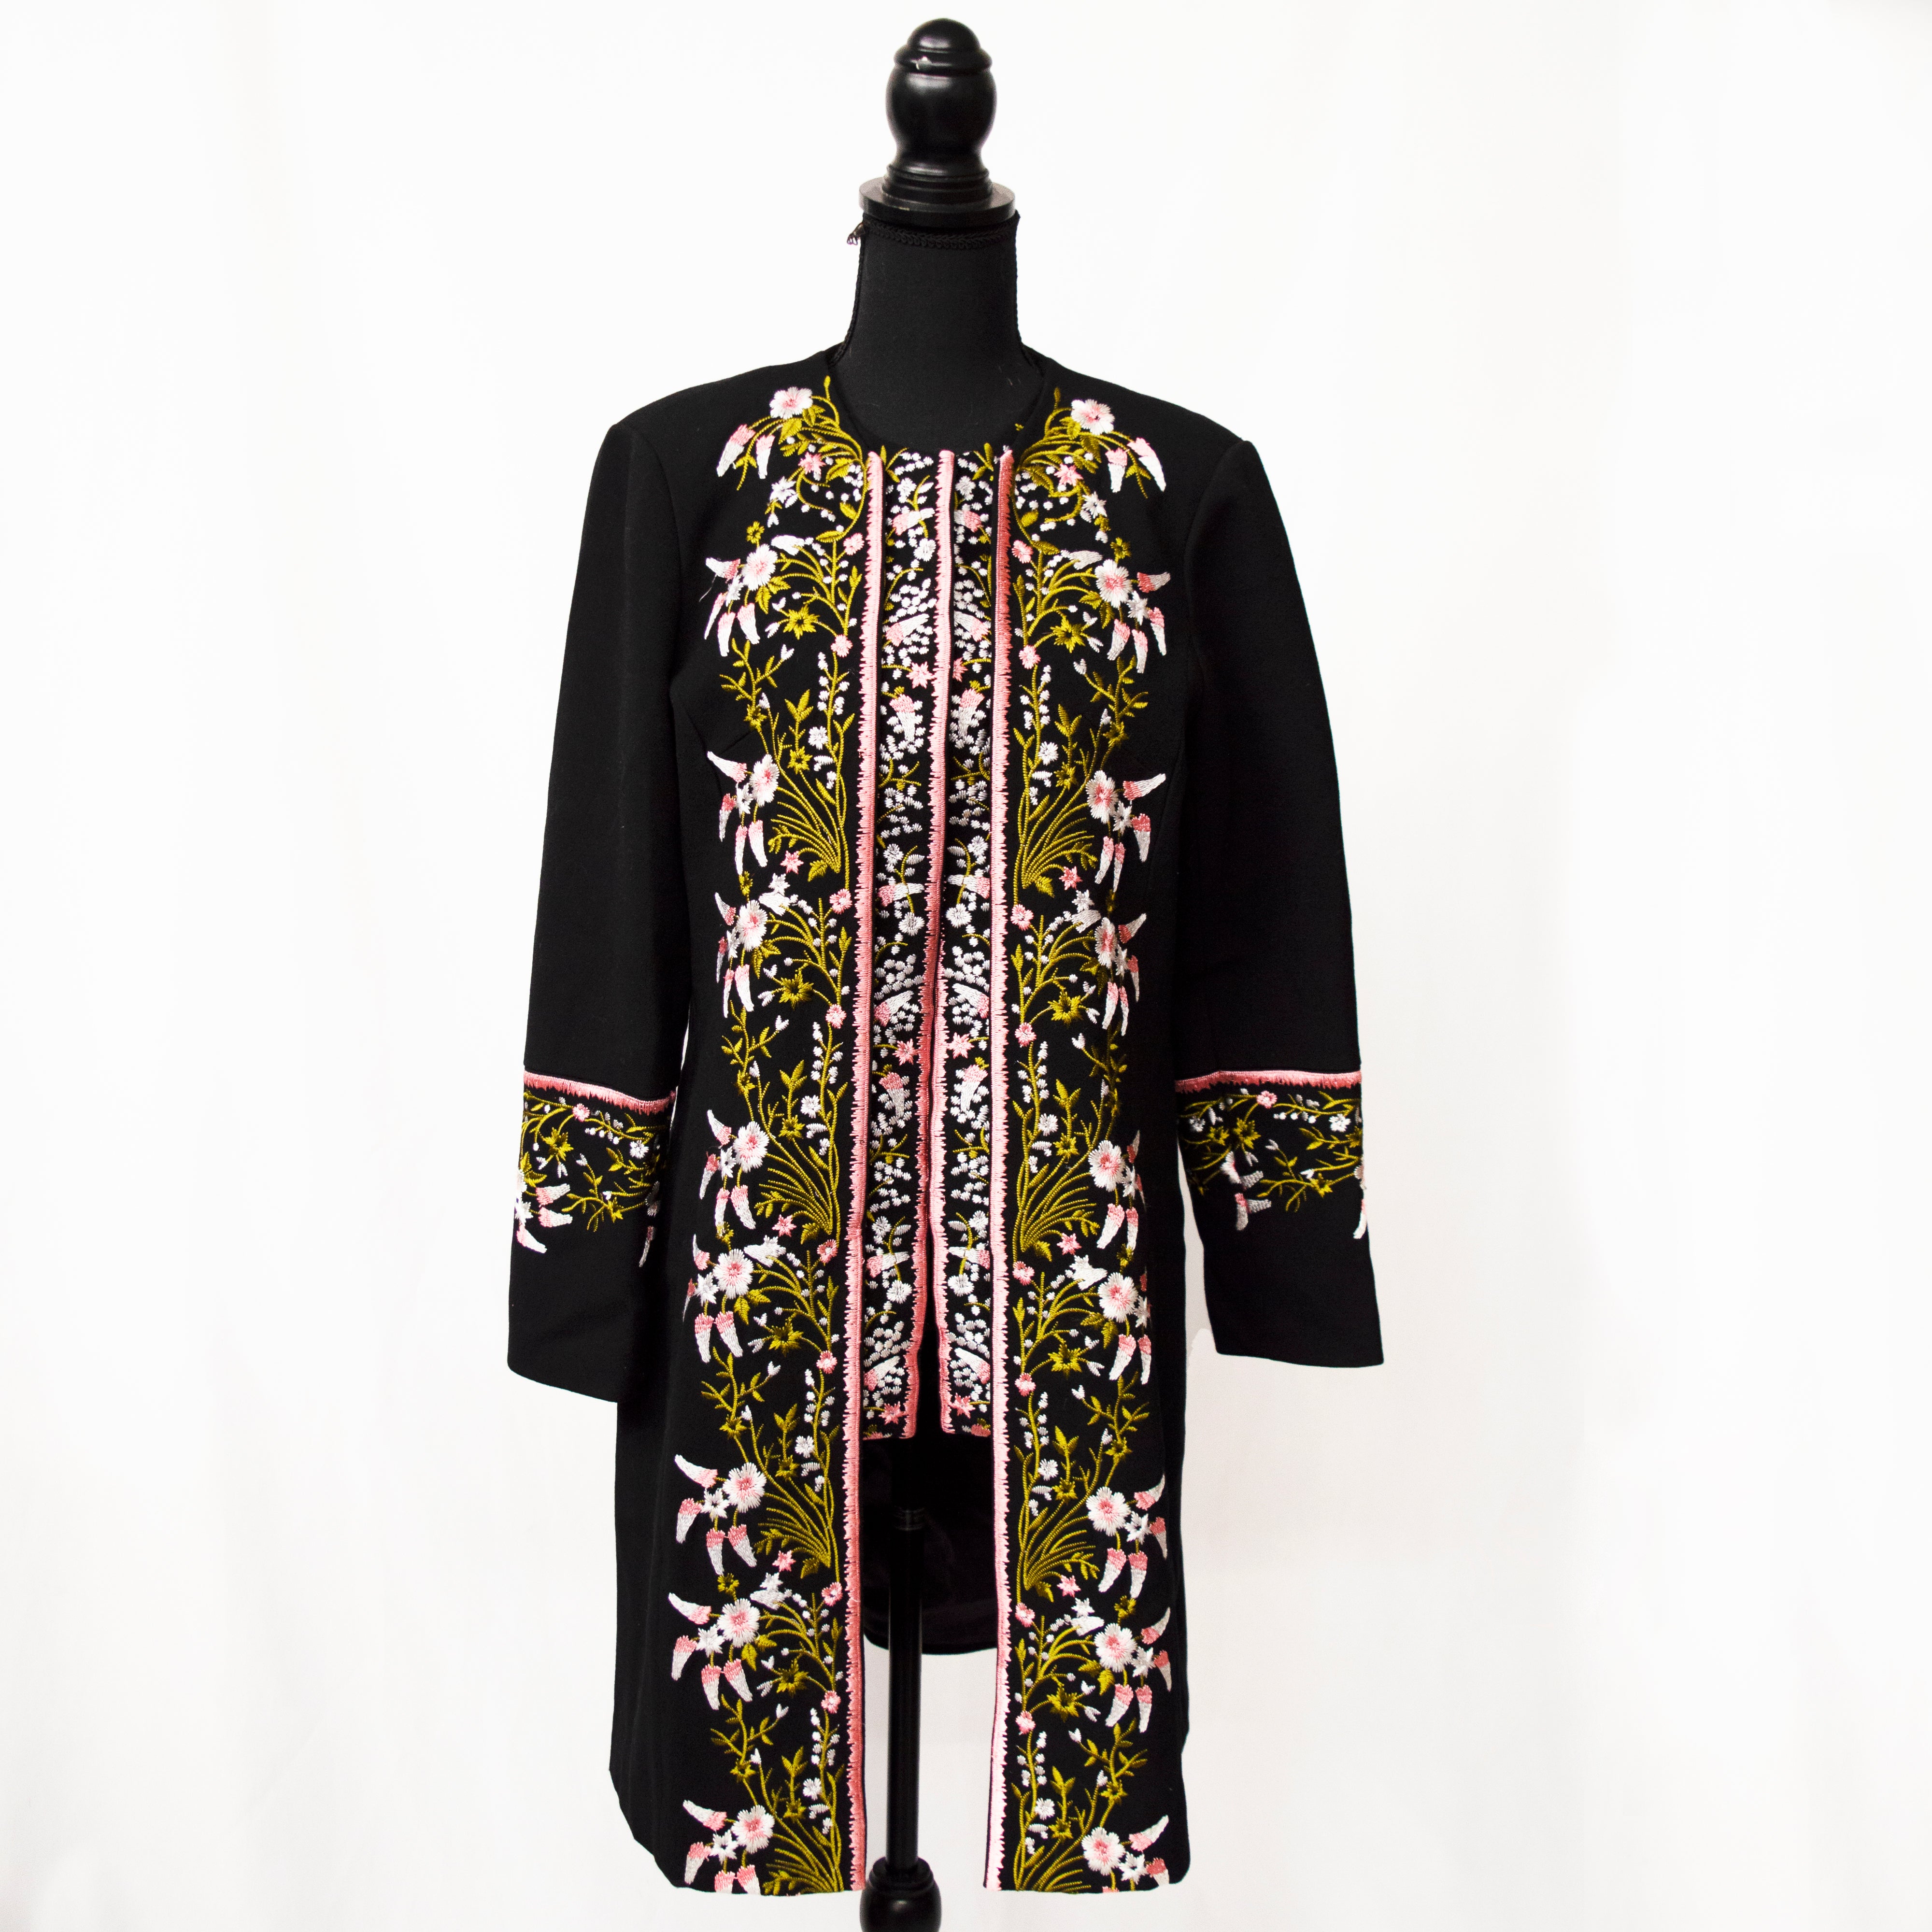 Vintage Asian Inspired Coat